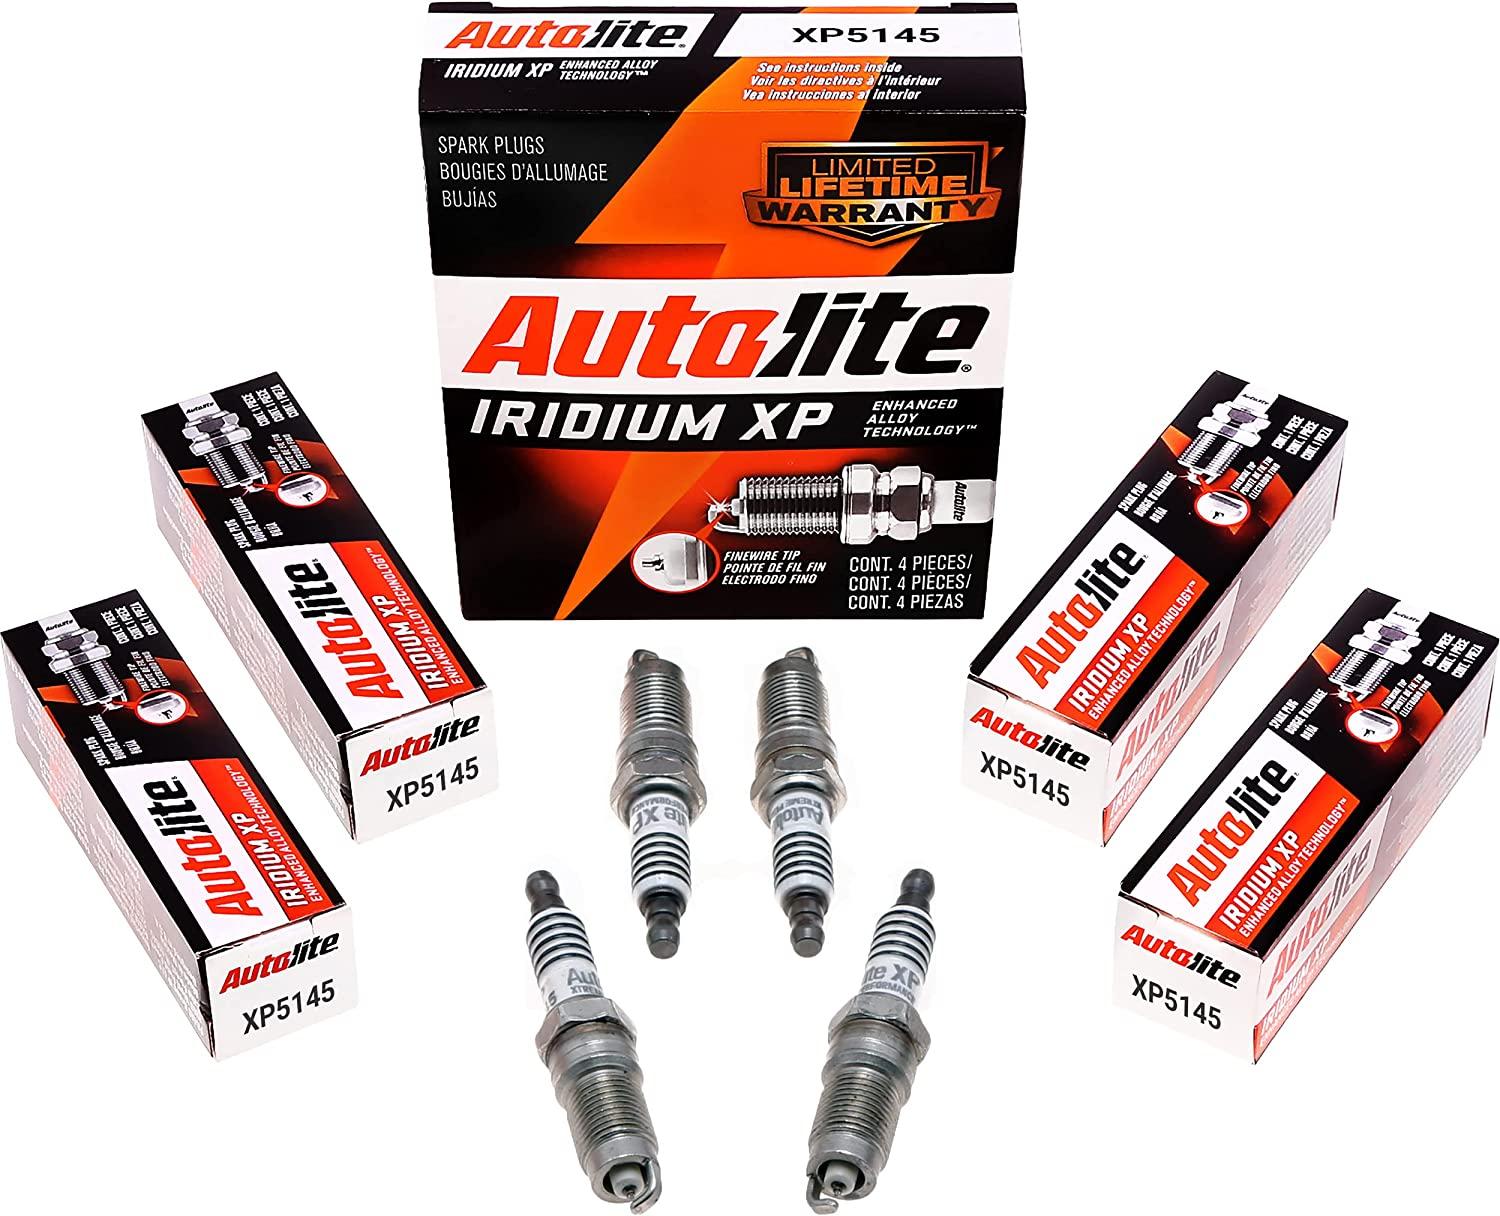 Autolite Iridium XP Automotive Replacement Spark Plugs for Free After Rebate